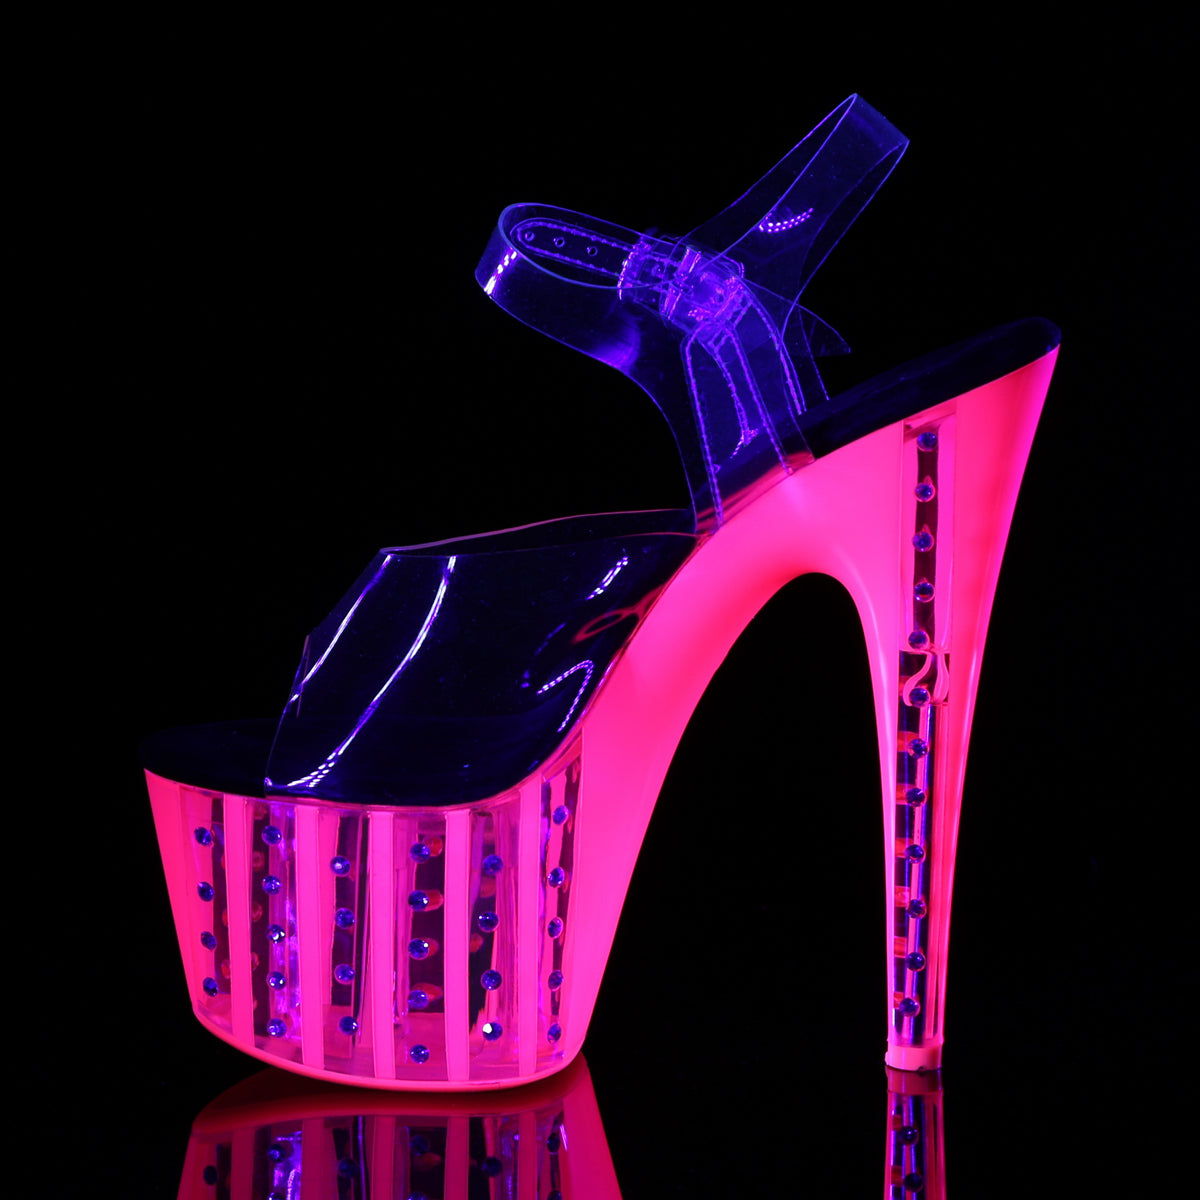 Pleaser Womens Sandals ADORE-708VLRS Clr/Neon H. Pink